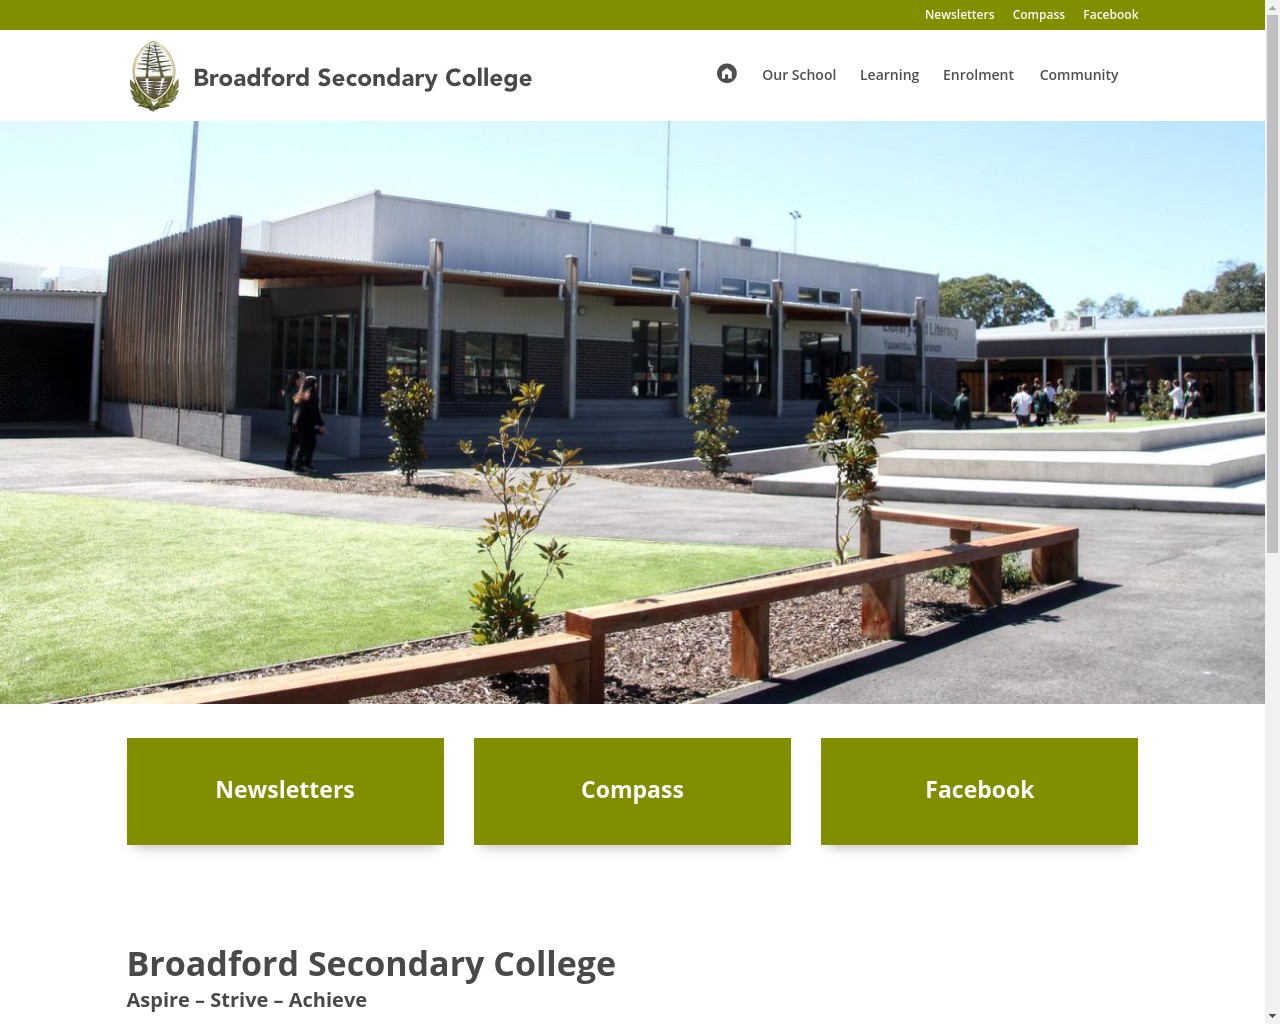 Broadford Secondary College